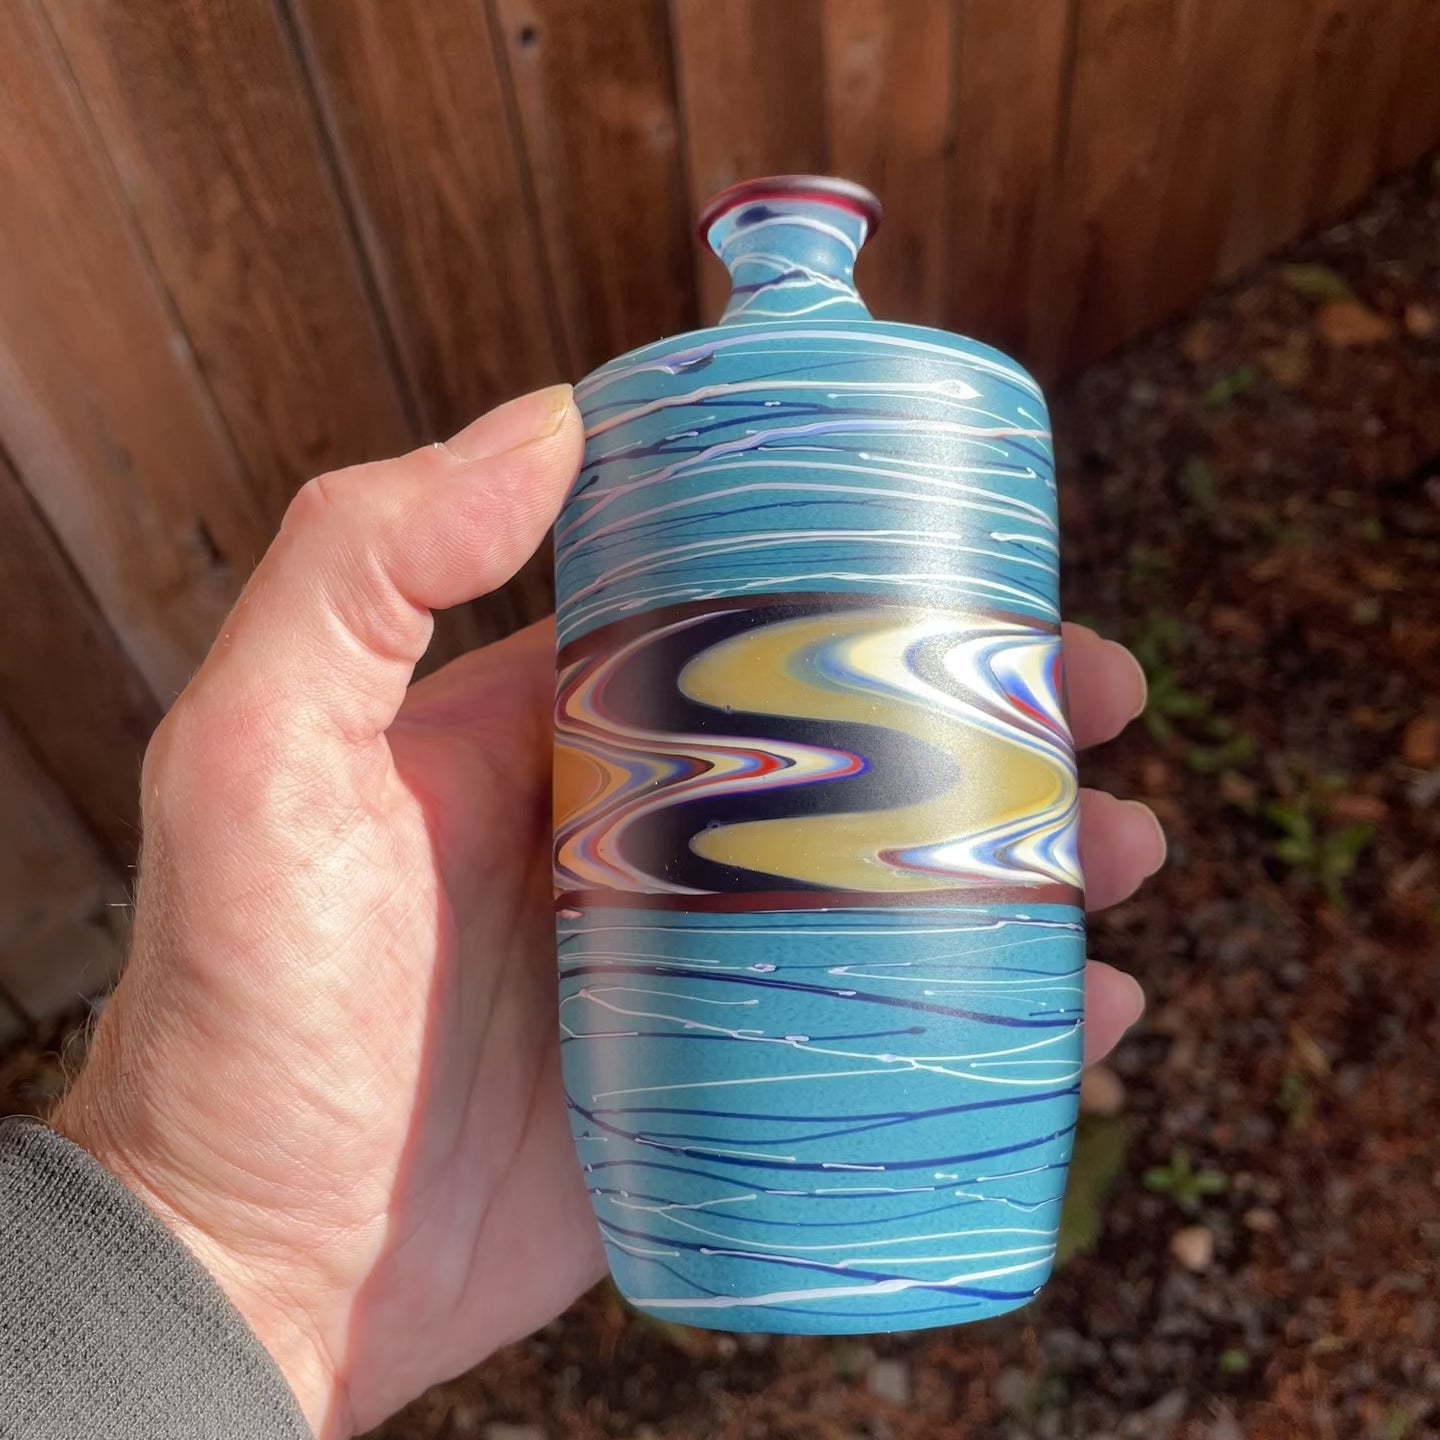 Blue Spruce Incalmo Vase 2302